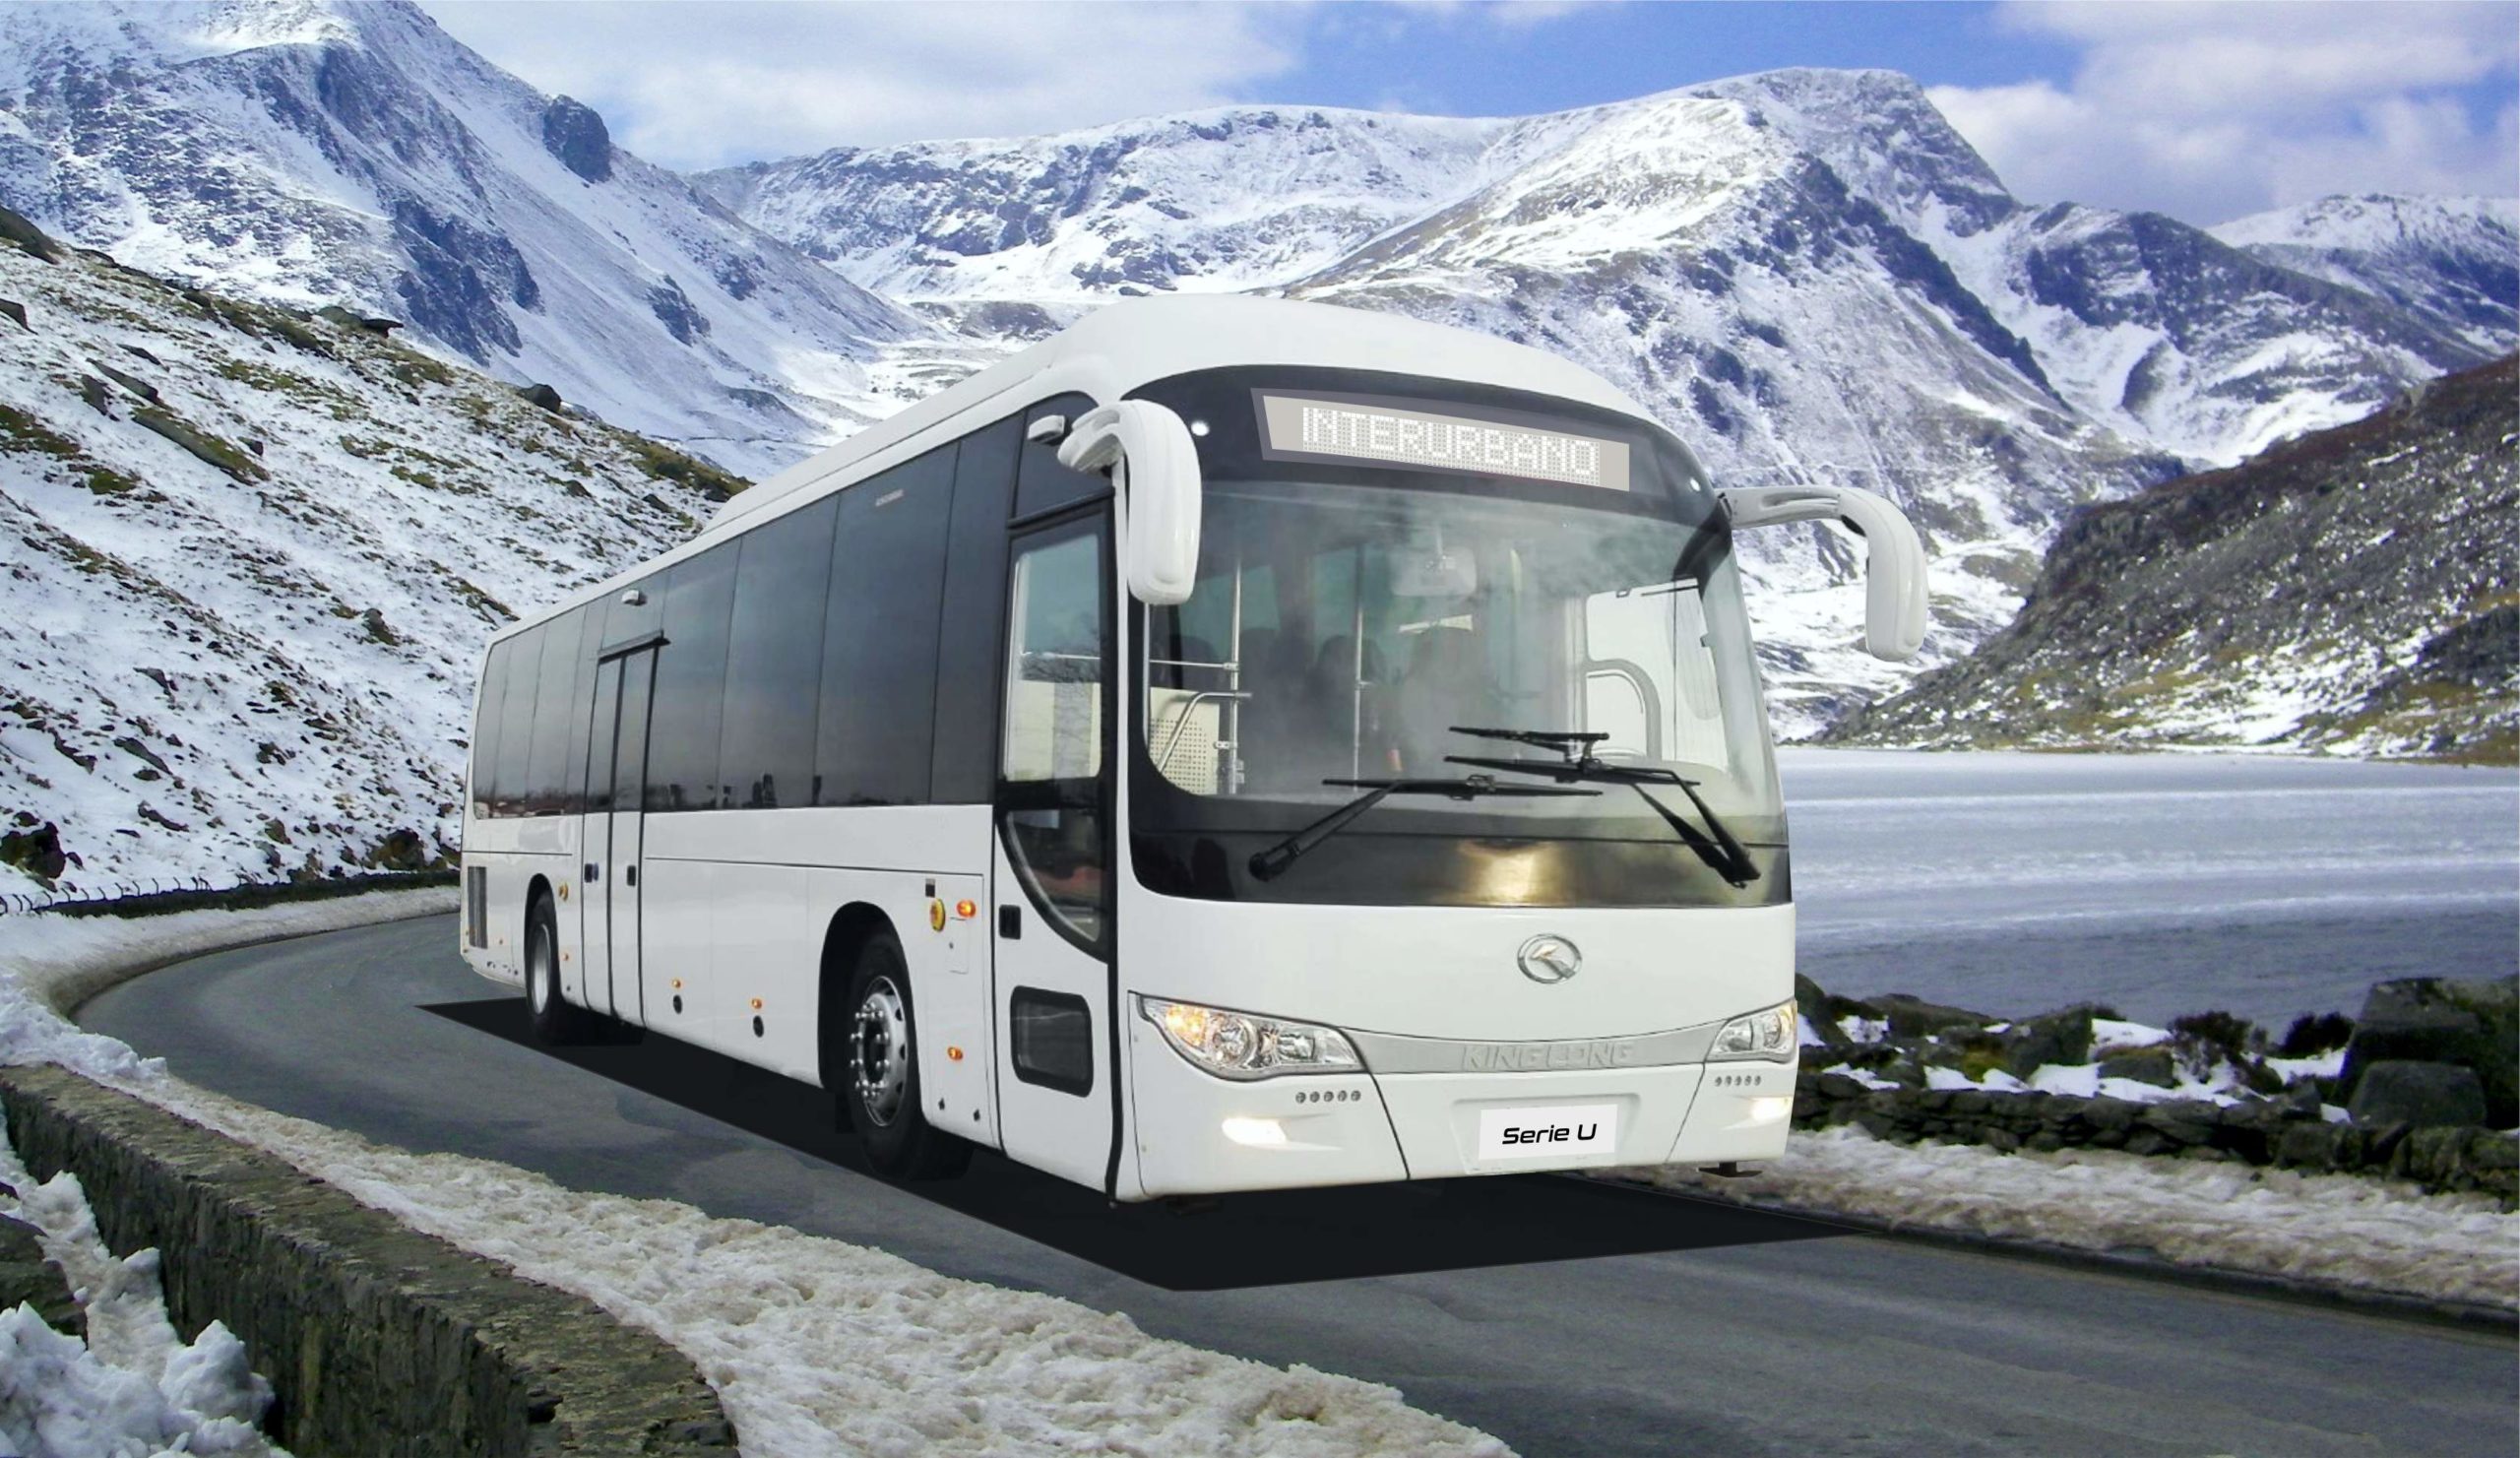 autobuses interurbanos king long para puertos de montaña